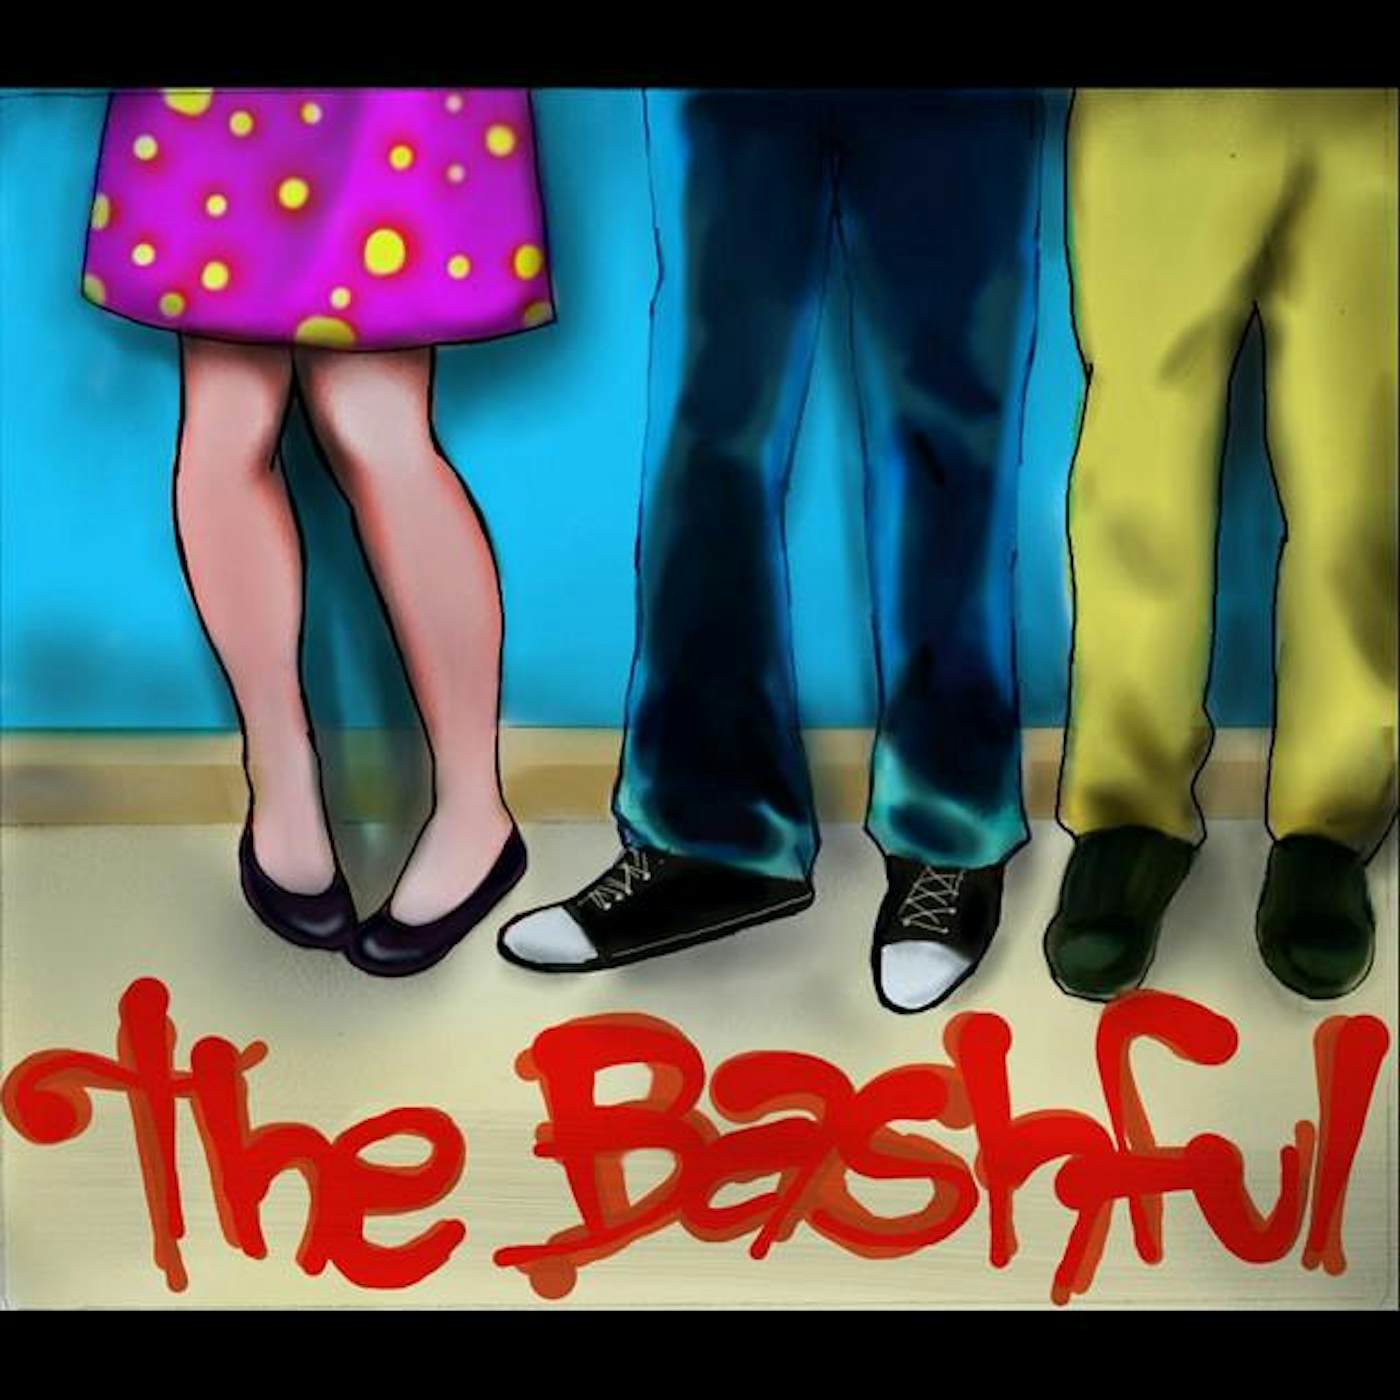 The Bashful